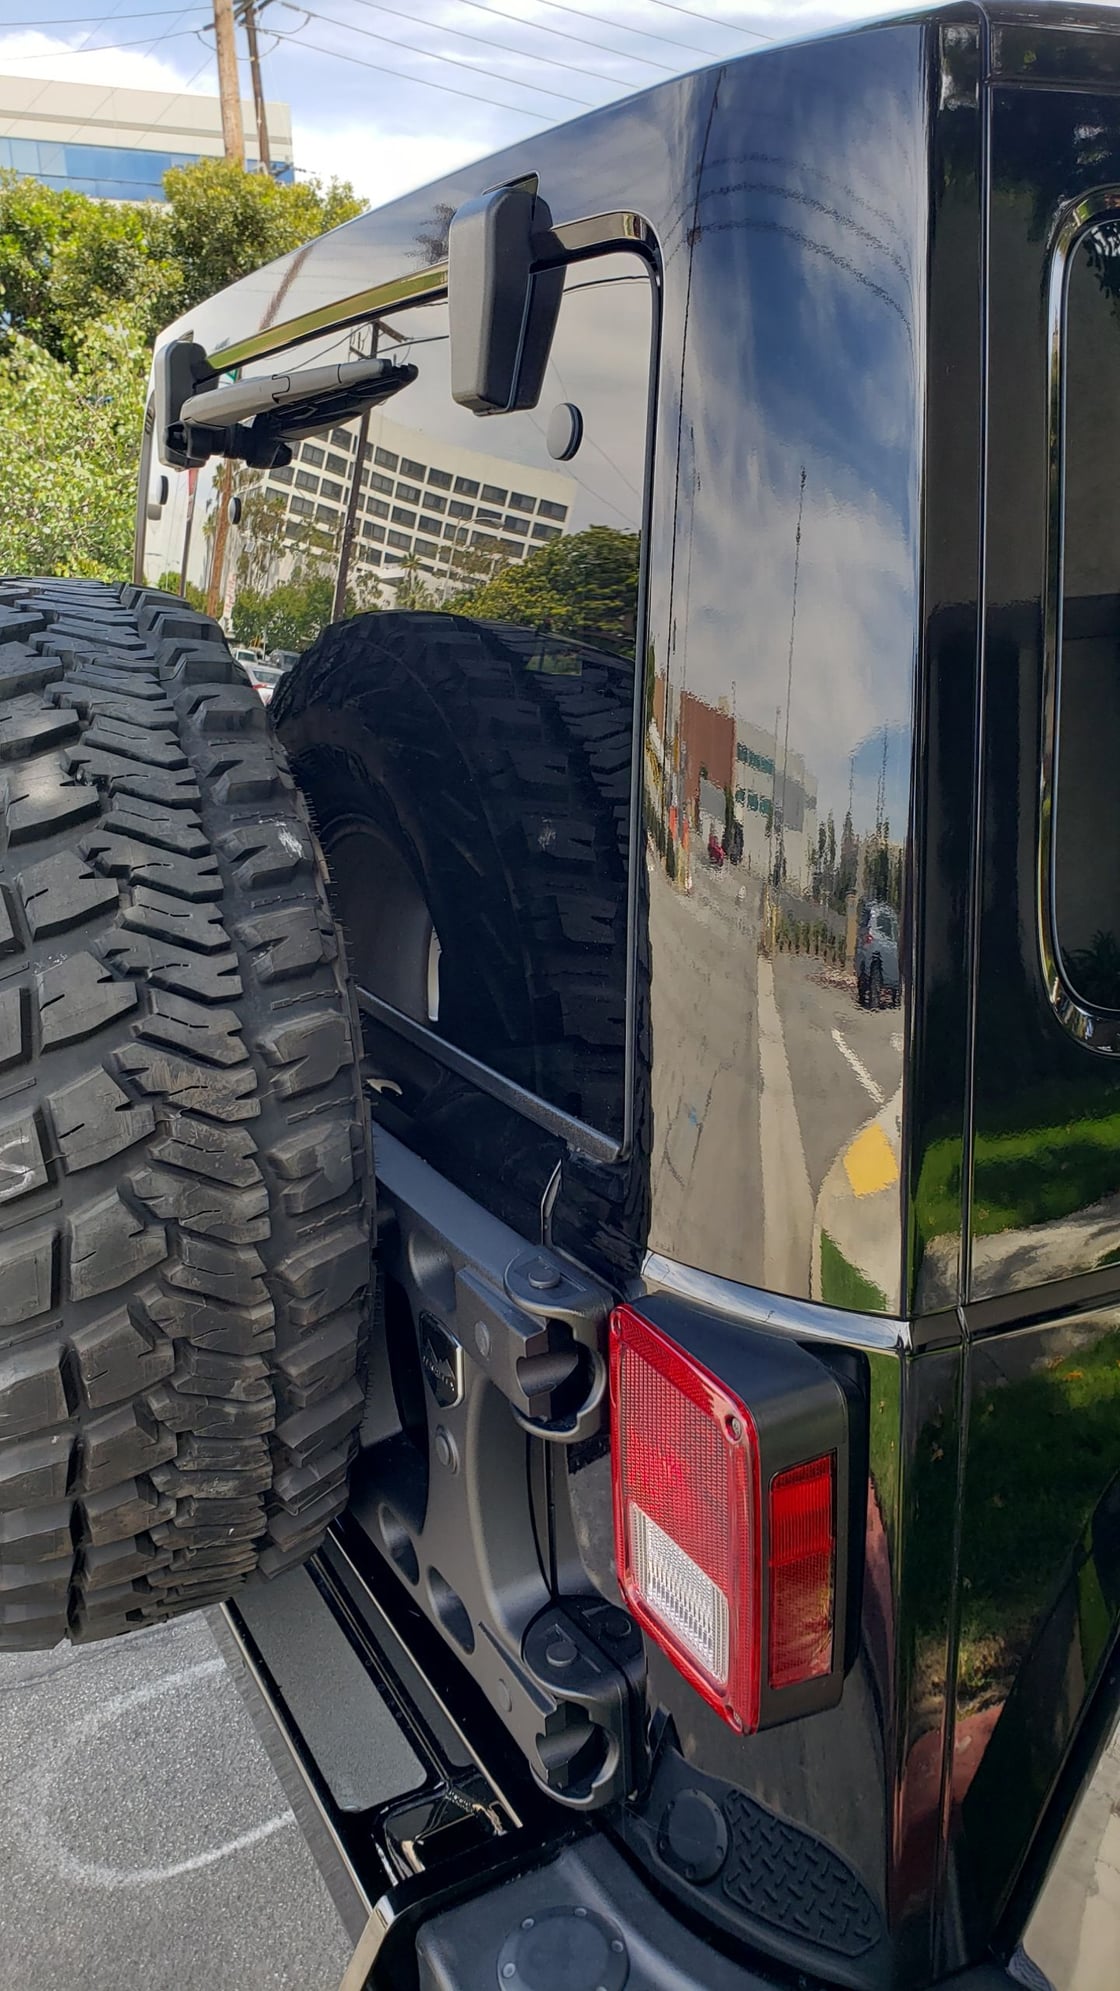 2014 Jeep Wrangler - 2014 AEV Jeep Rubicon, 42k mi - Used - VIN 1c4bjwcg9el241546 - 42,350 Miles - 6 cyl - 4WD - Automatic - SUV - Black - El Segundo, CA 90245, United States